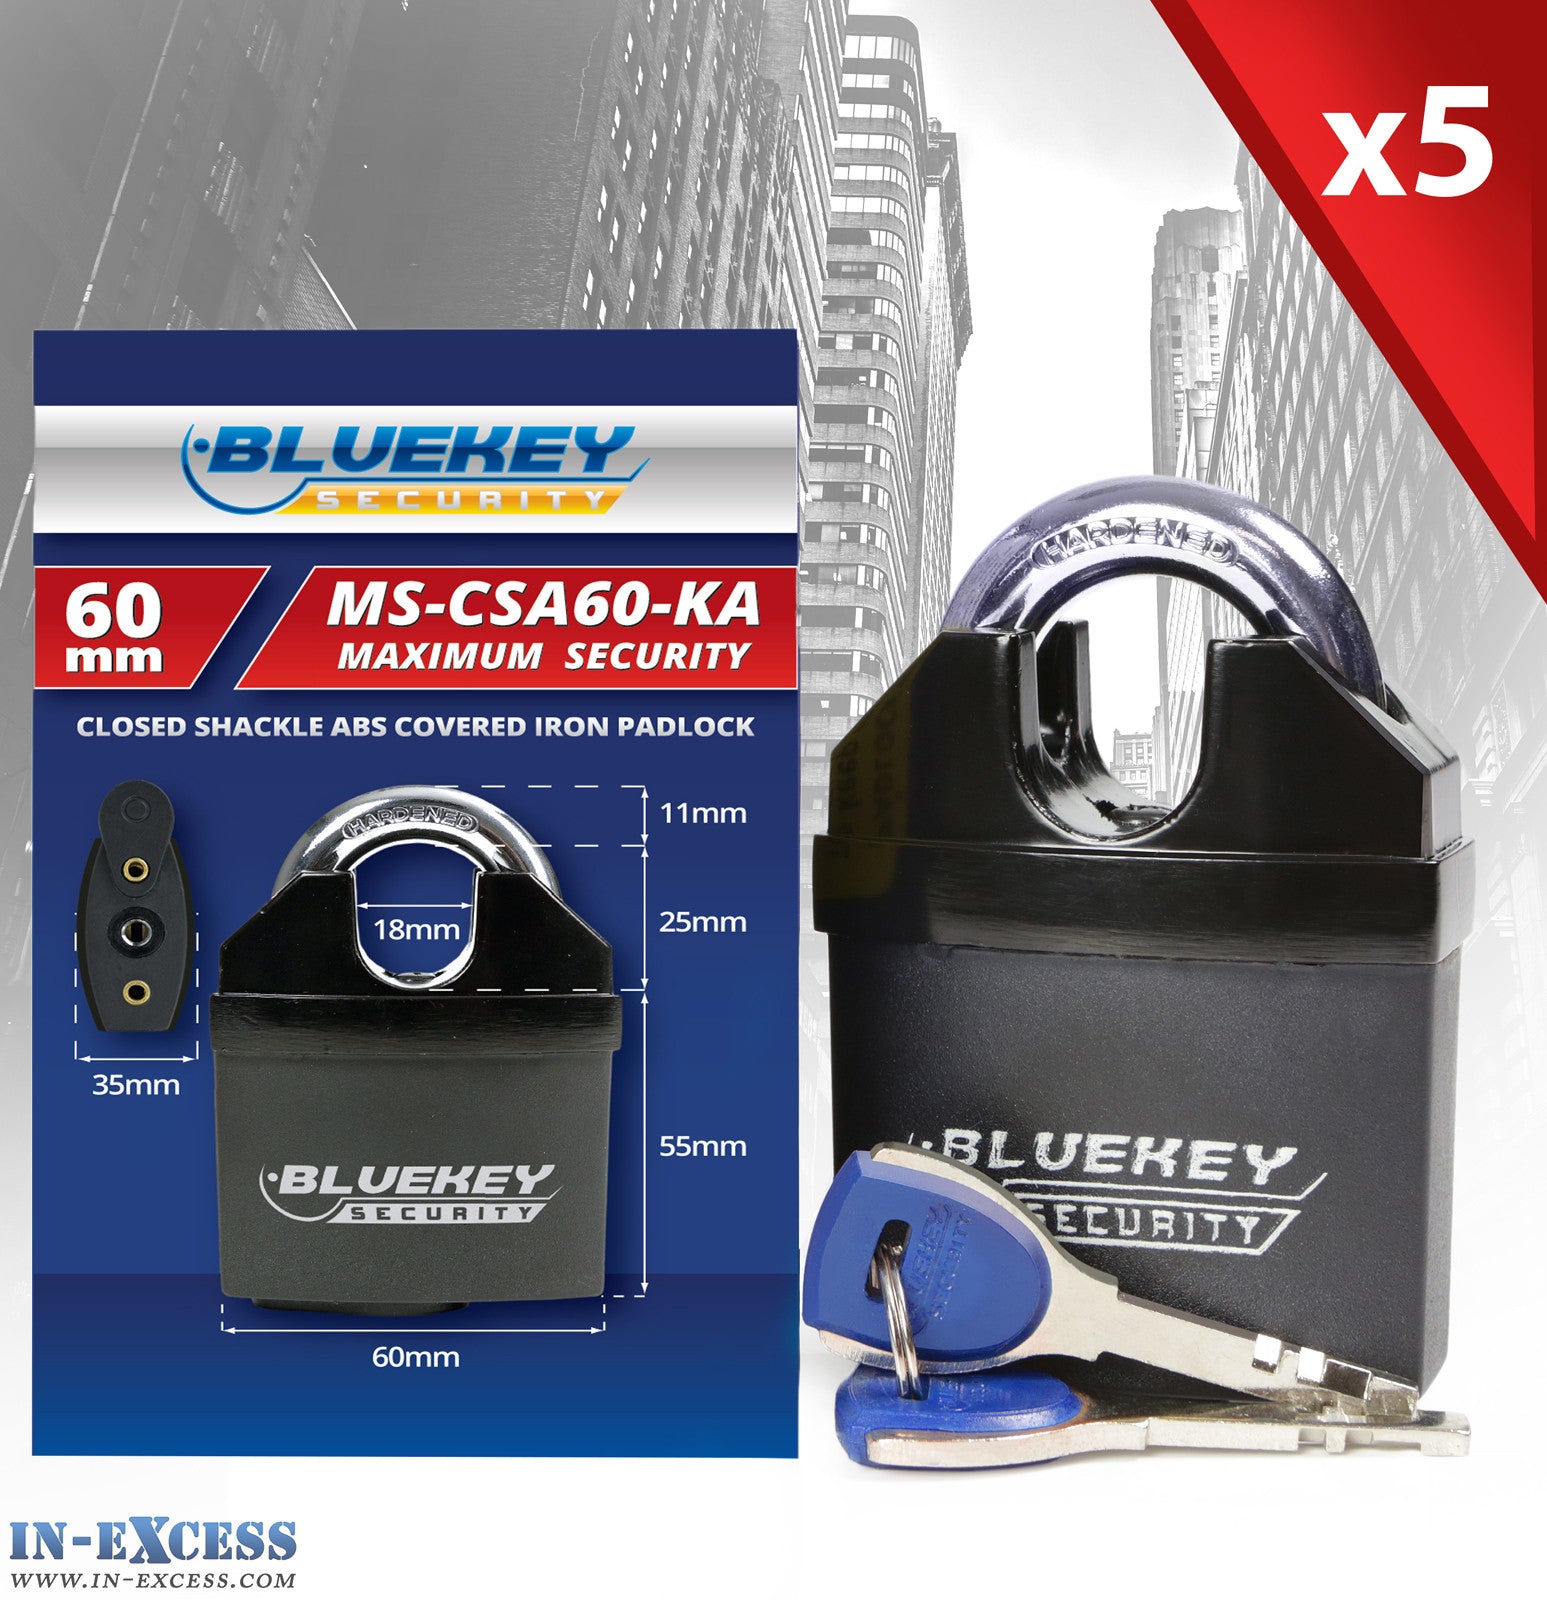 5x Bluekey Maximum Security Solid Iron Body Keyed Alike 60mm Padlocks - MS-CSA60-KA